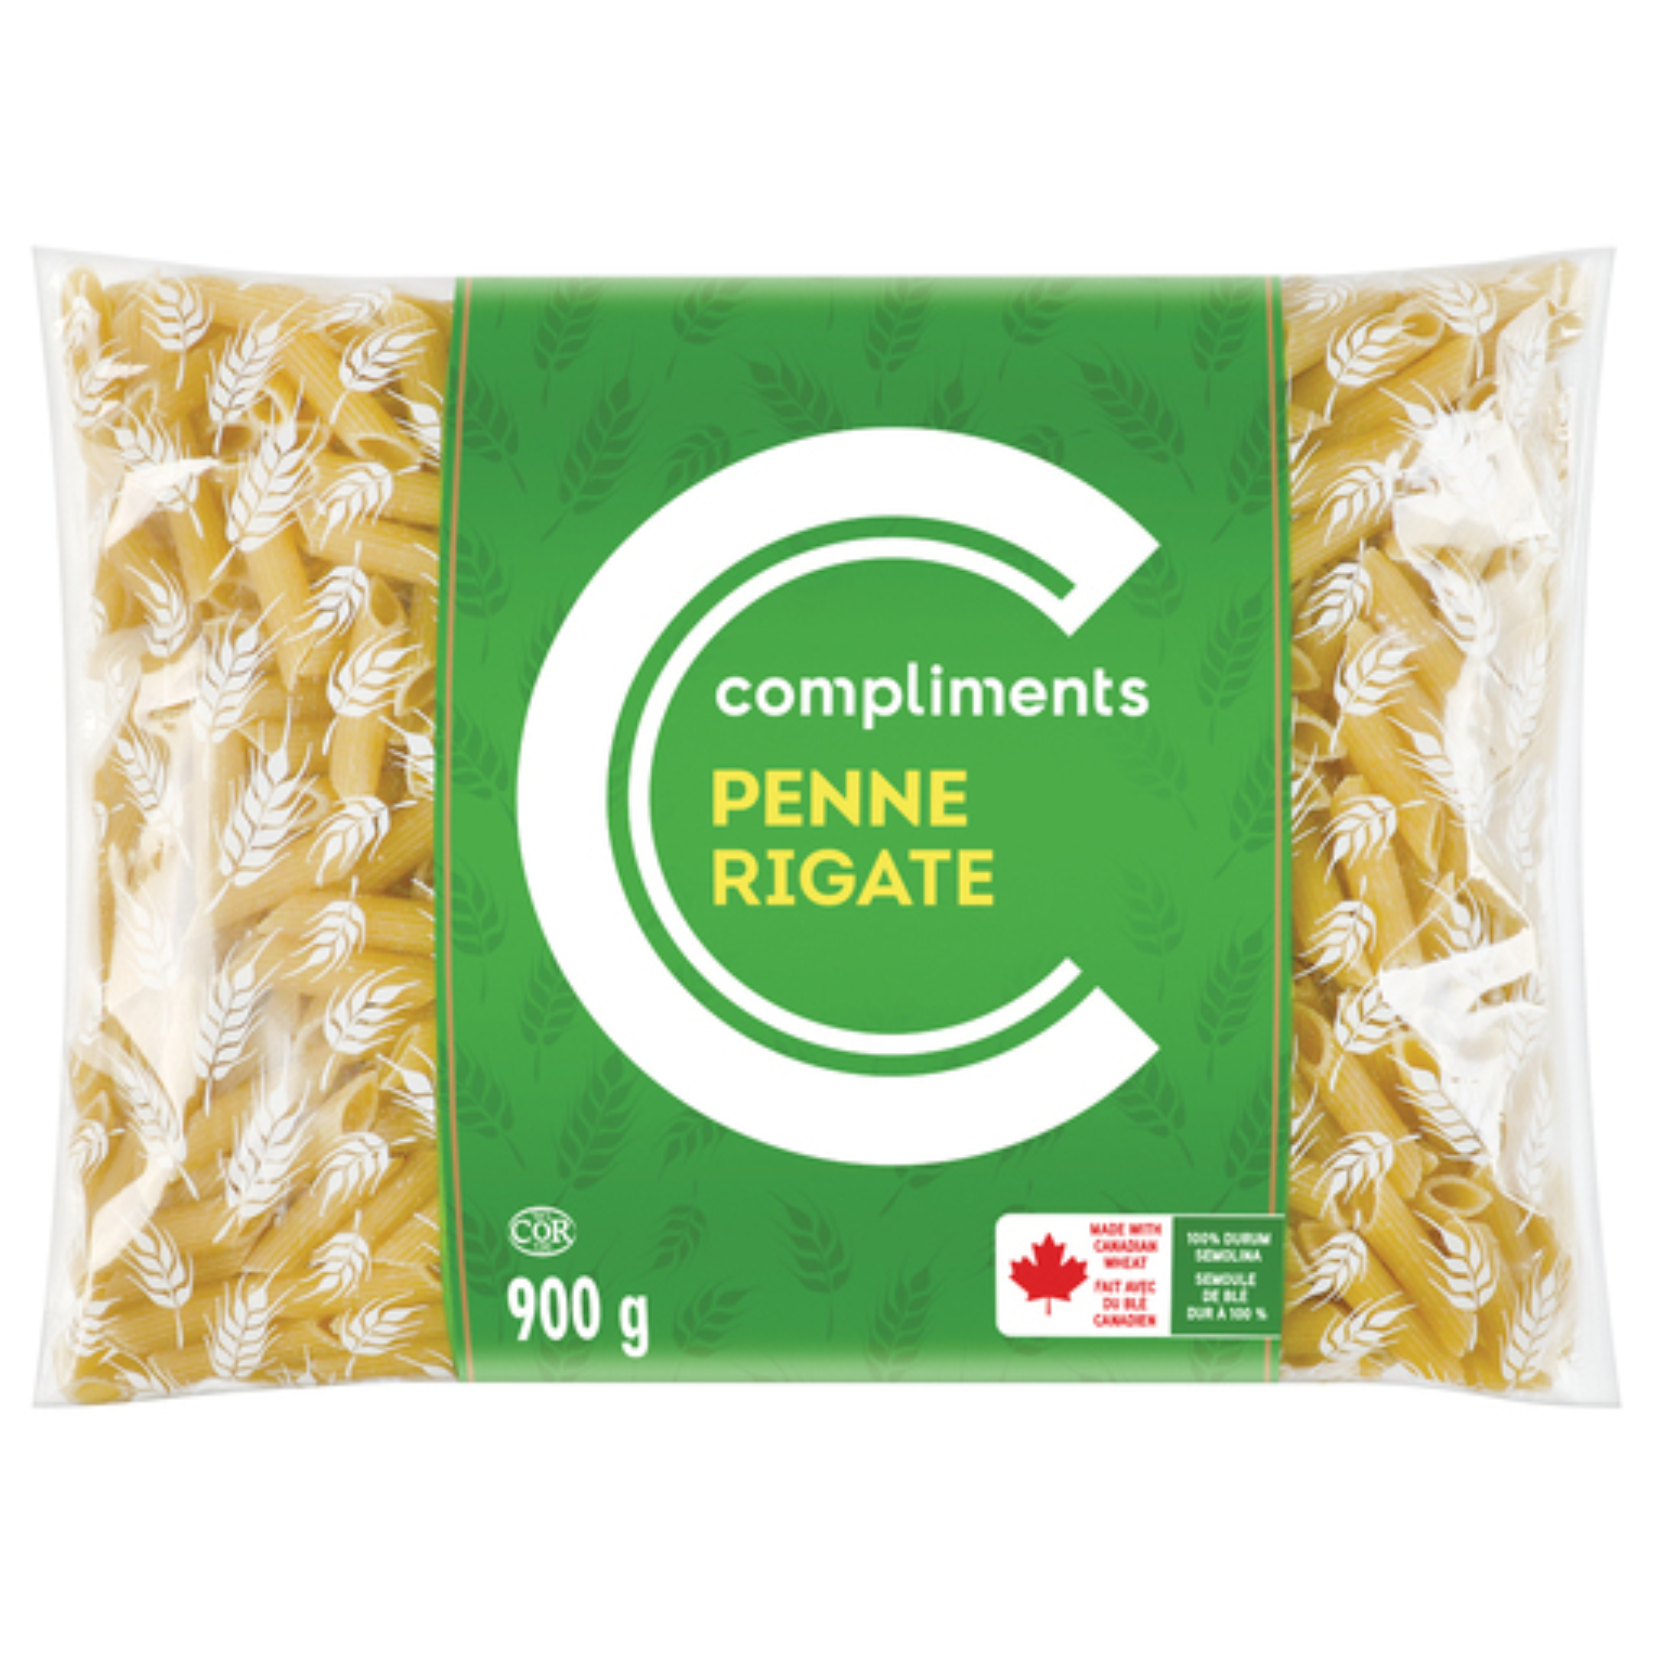 Compliments Penne Rigate Pasta 900g